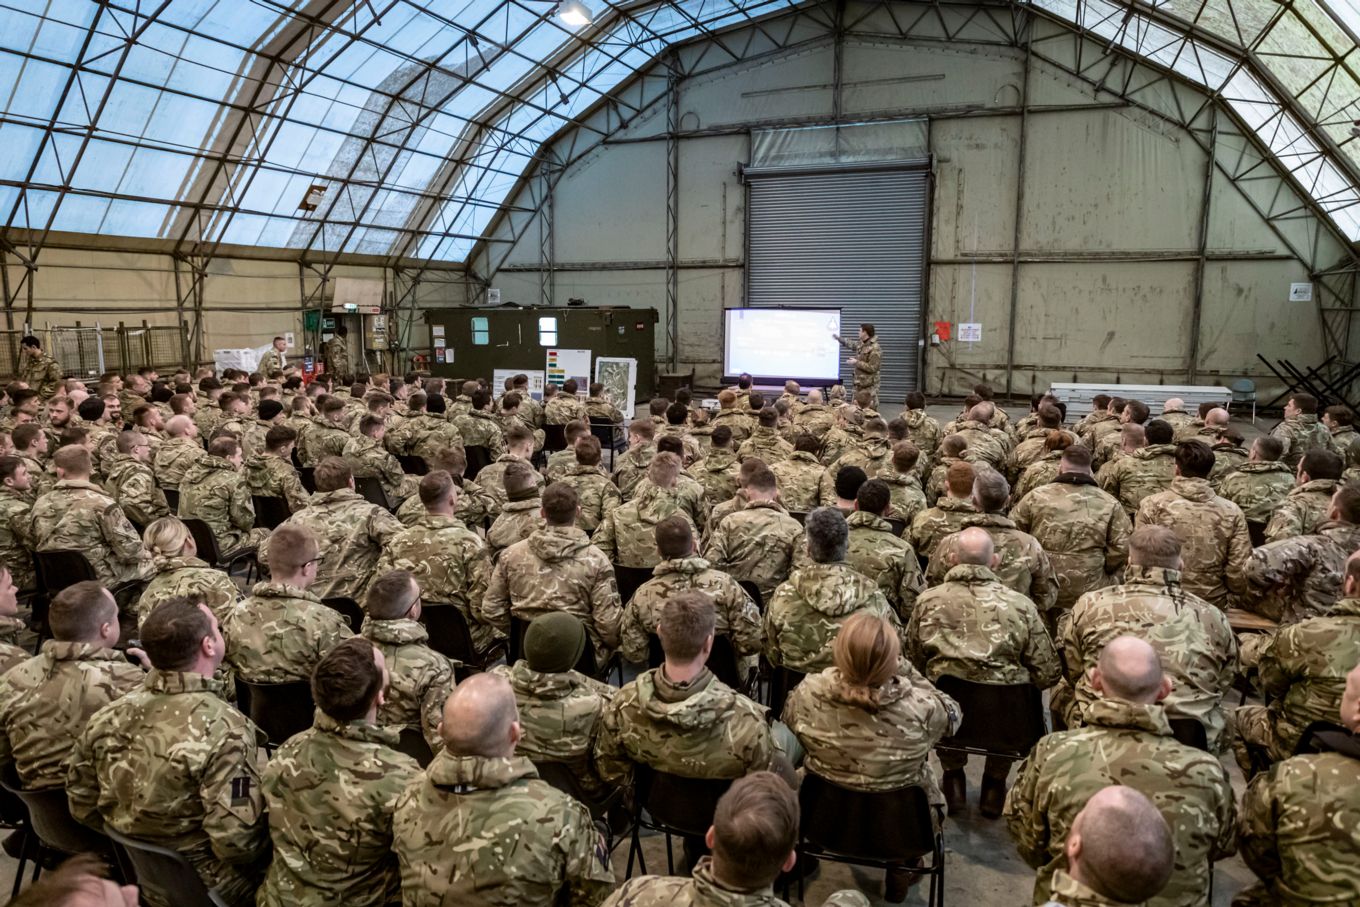 RAF personnel receiving briefing in hanger